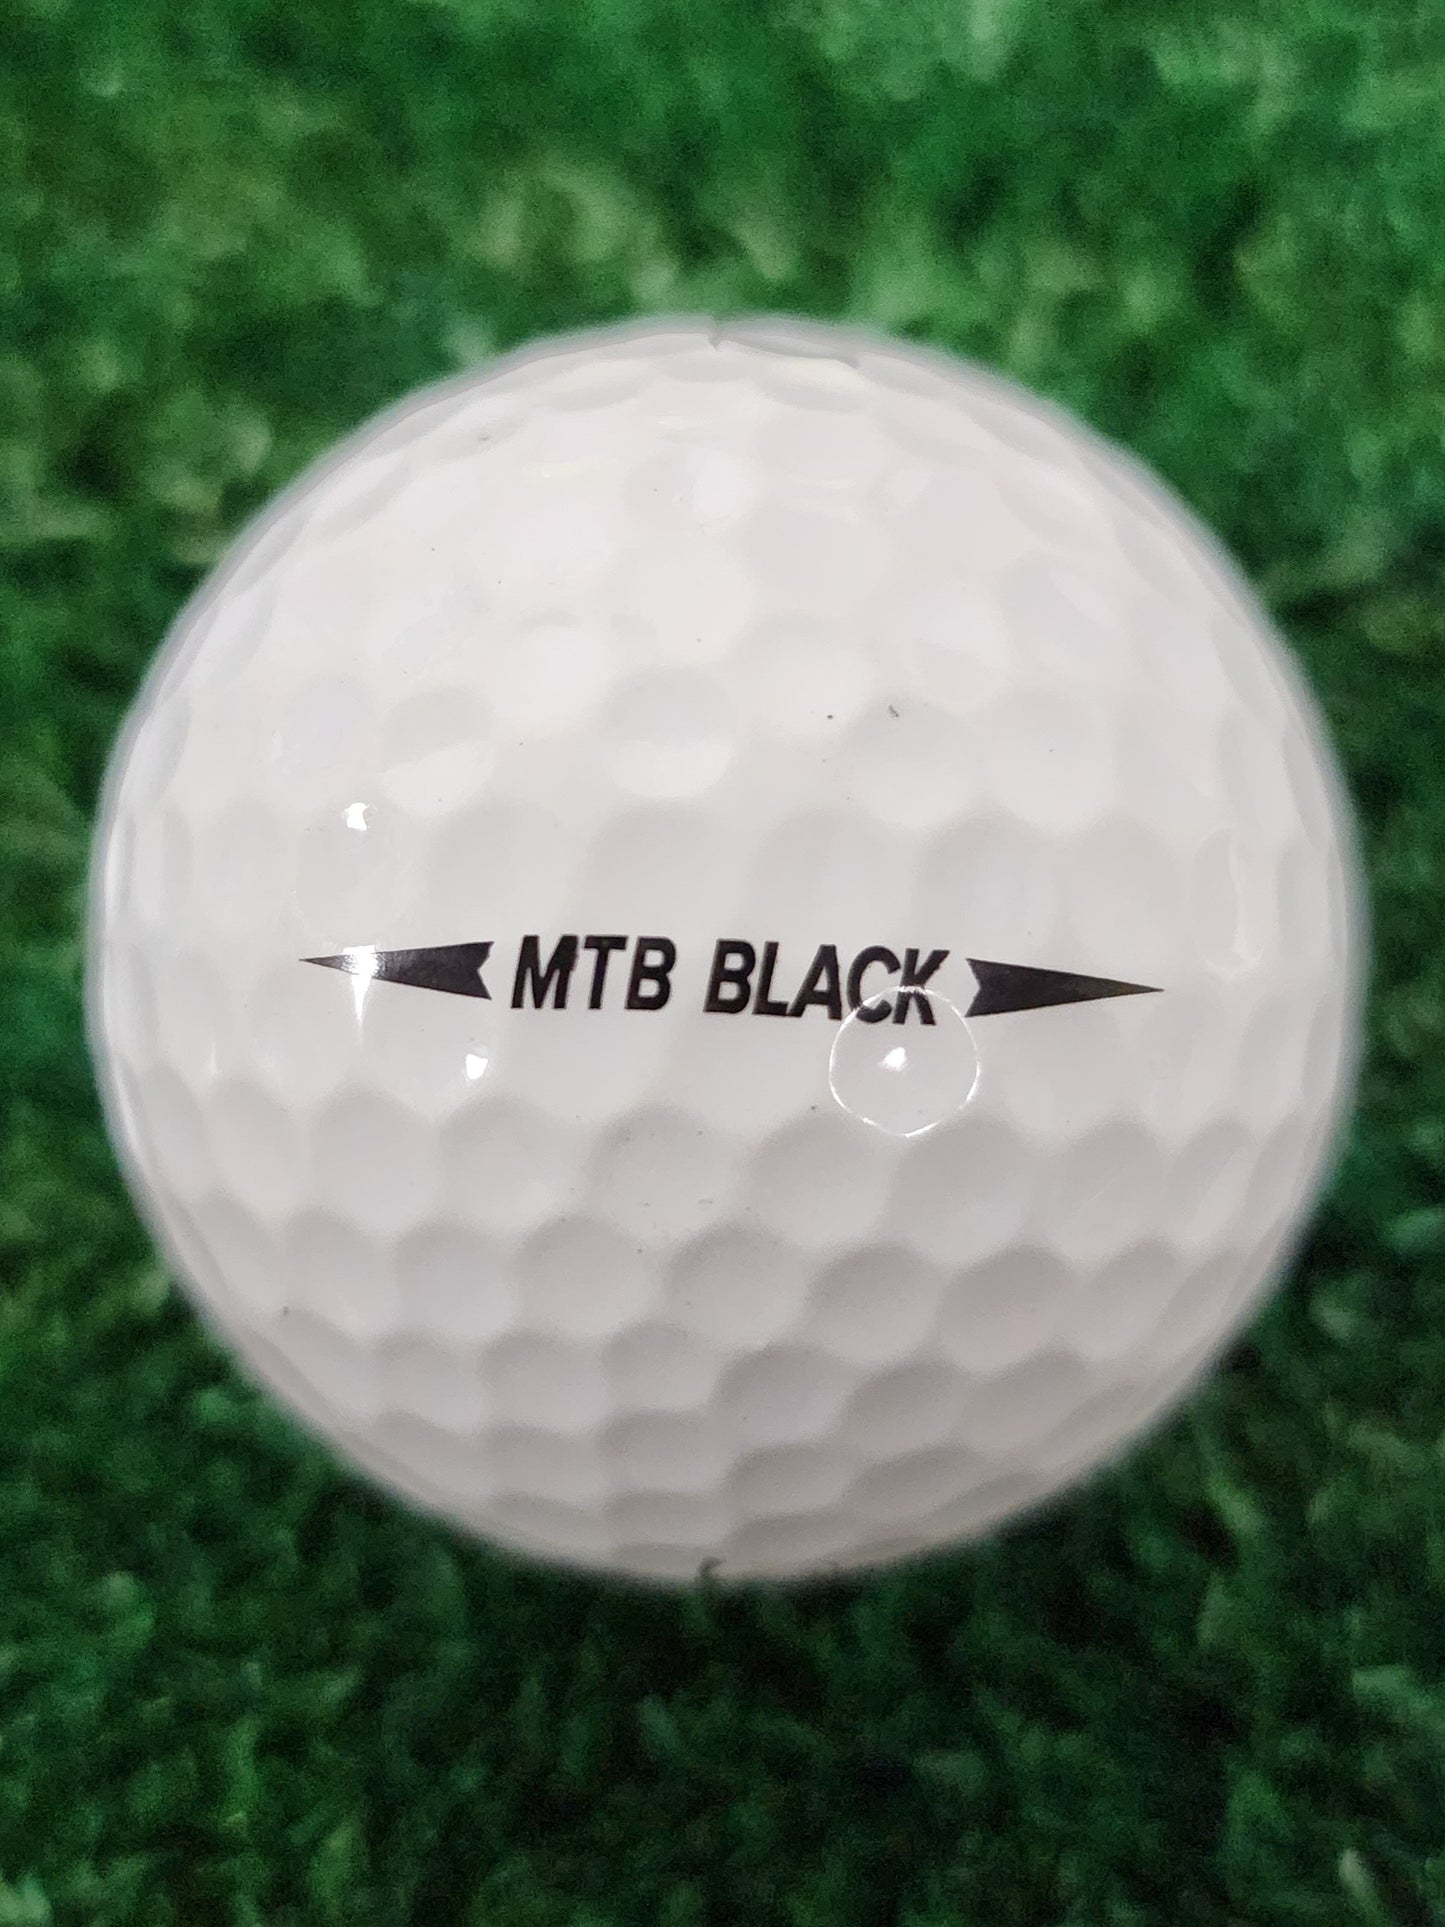 Snell MTB Black white - 1 dozen